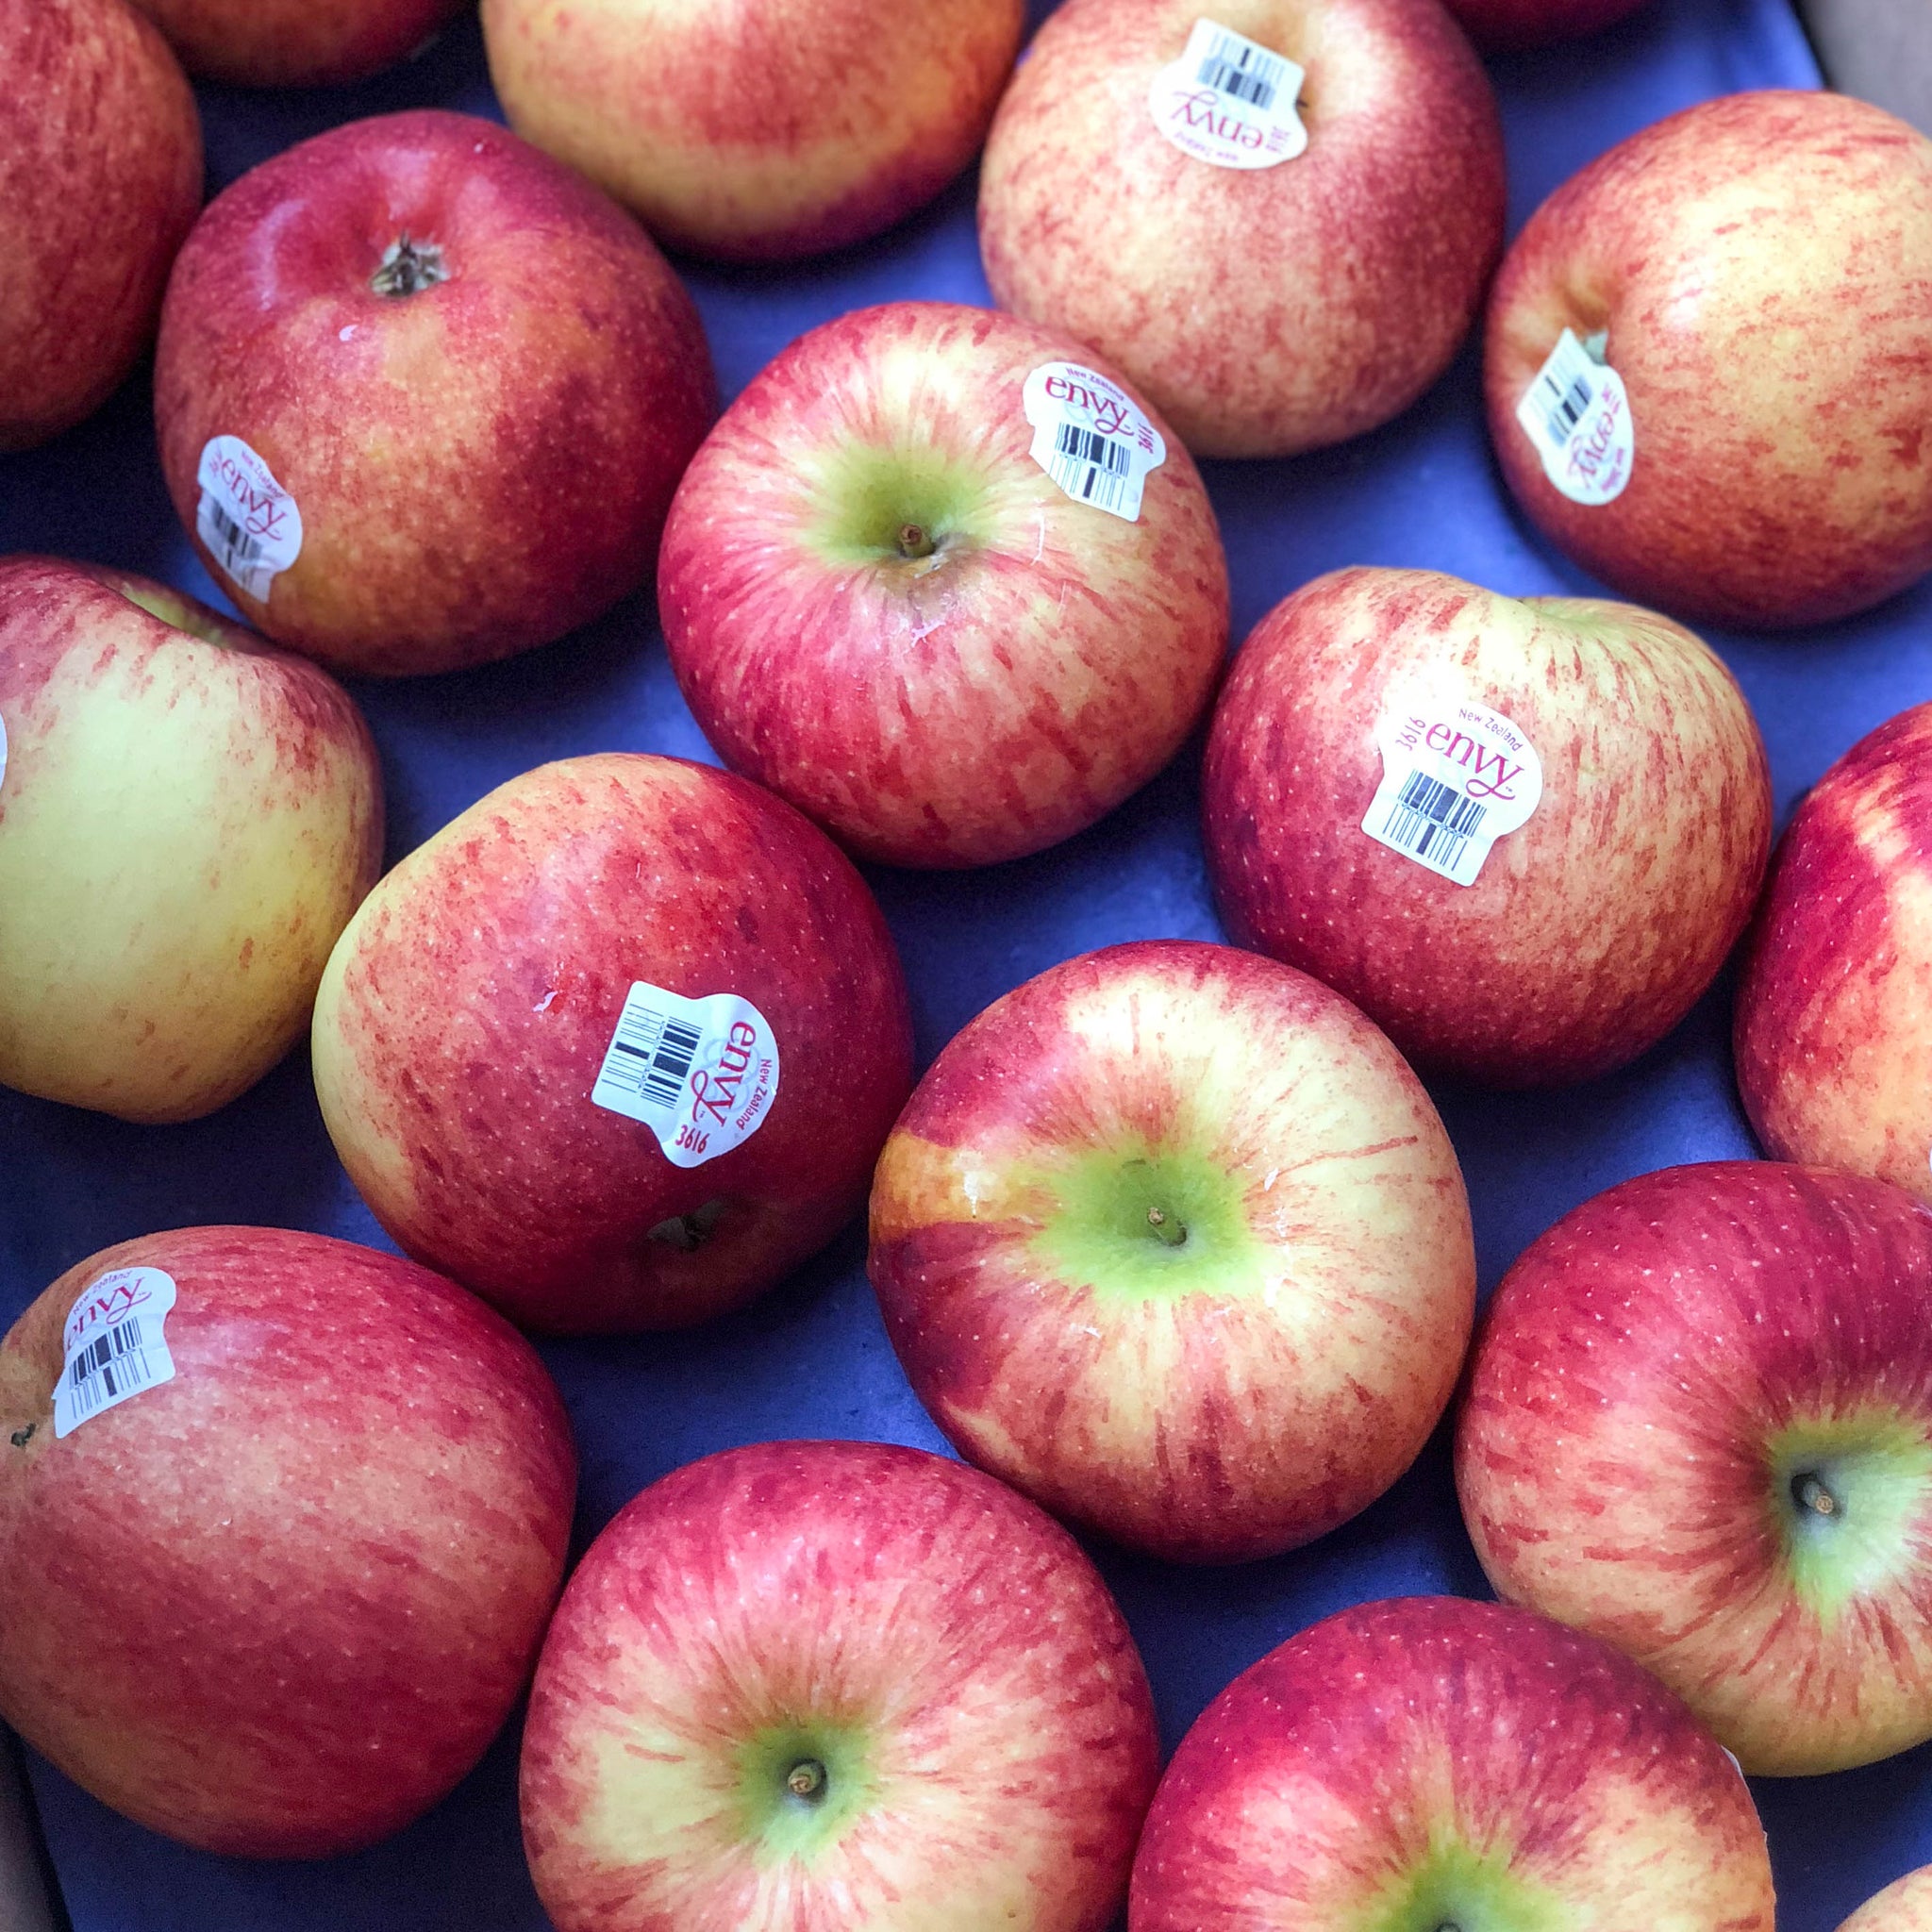 New Zealand Envy Apple (4pcs) - Skcfruits